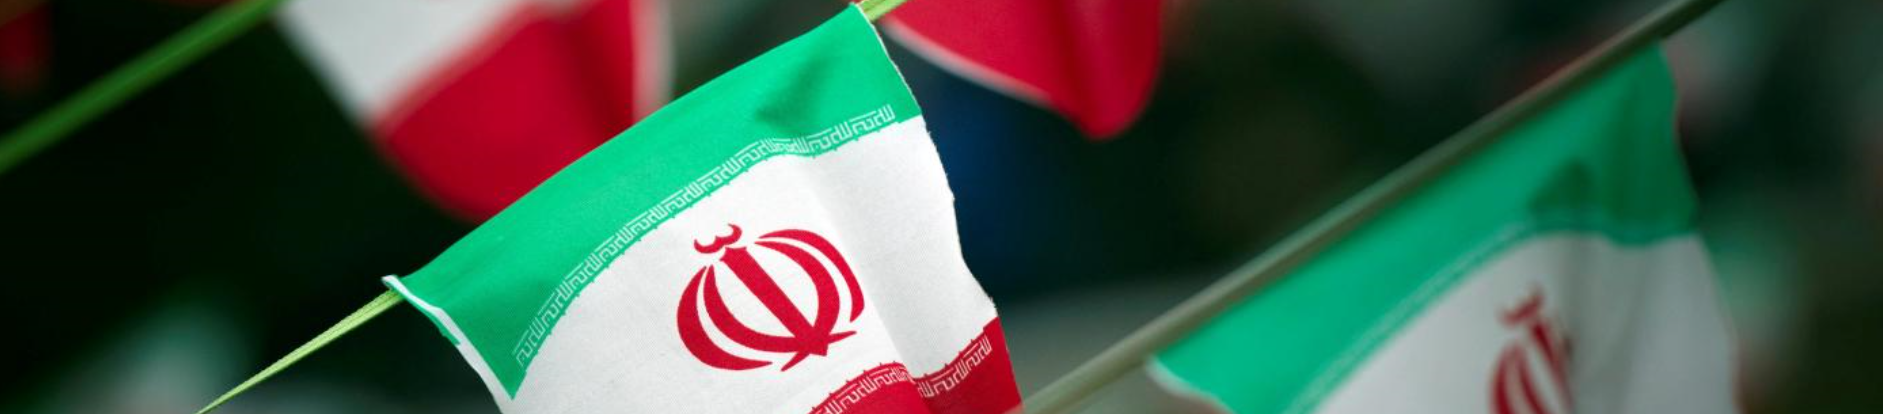 Iranian flag 3c LLLL